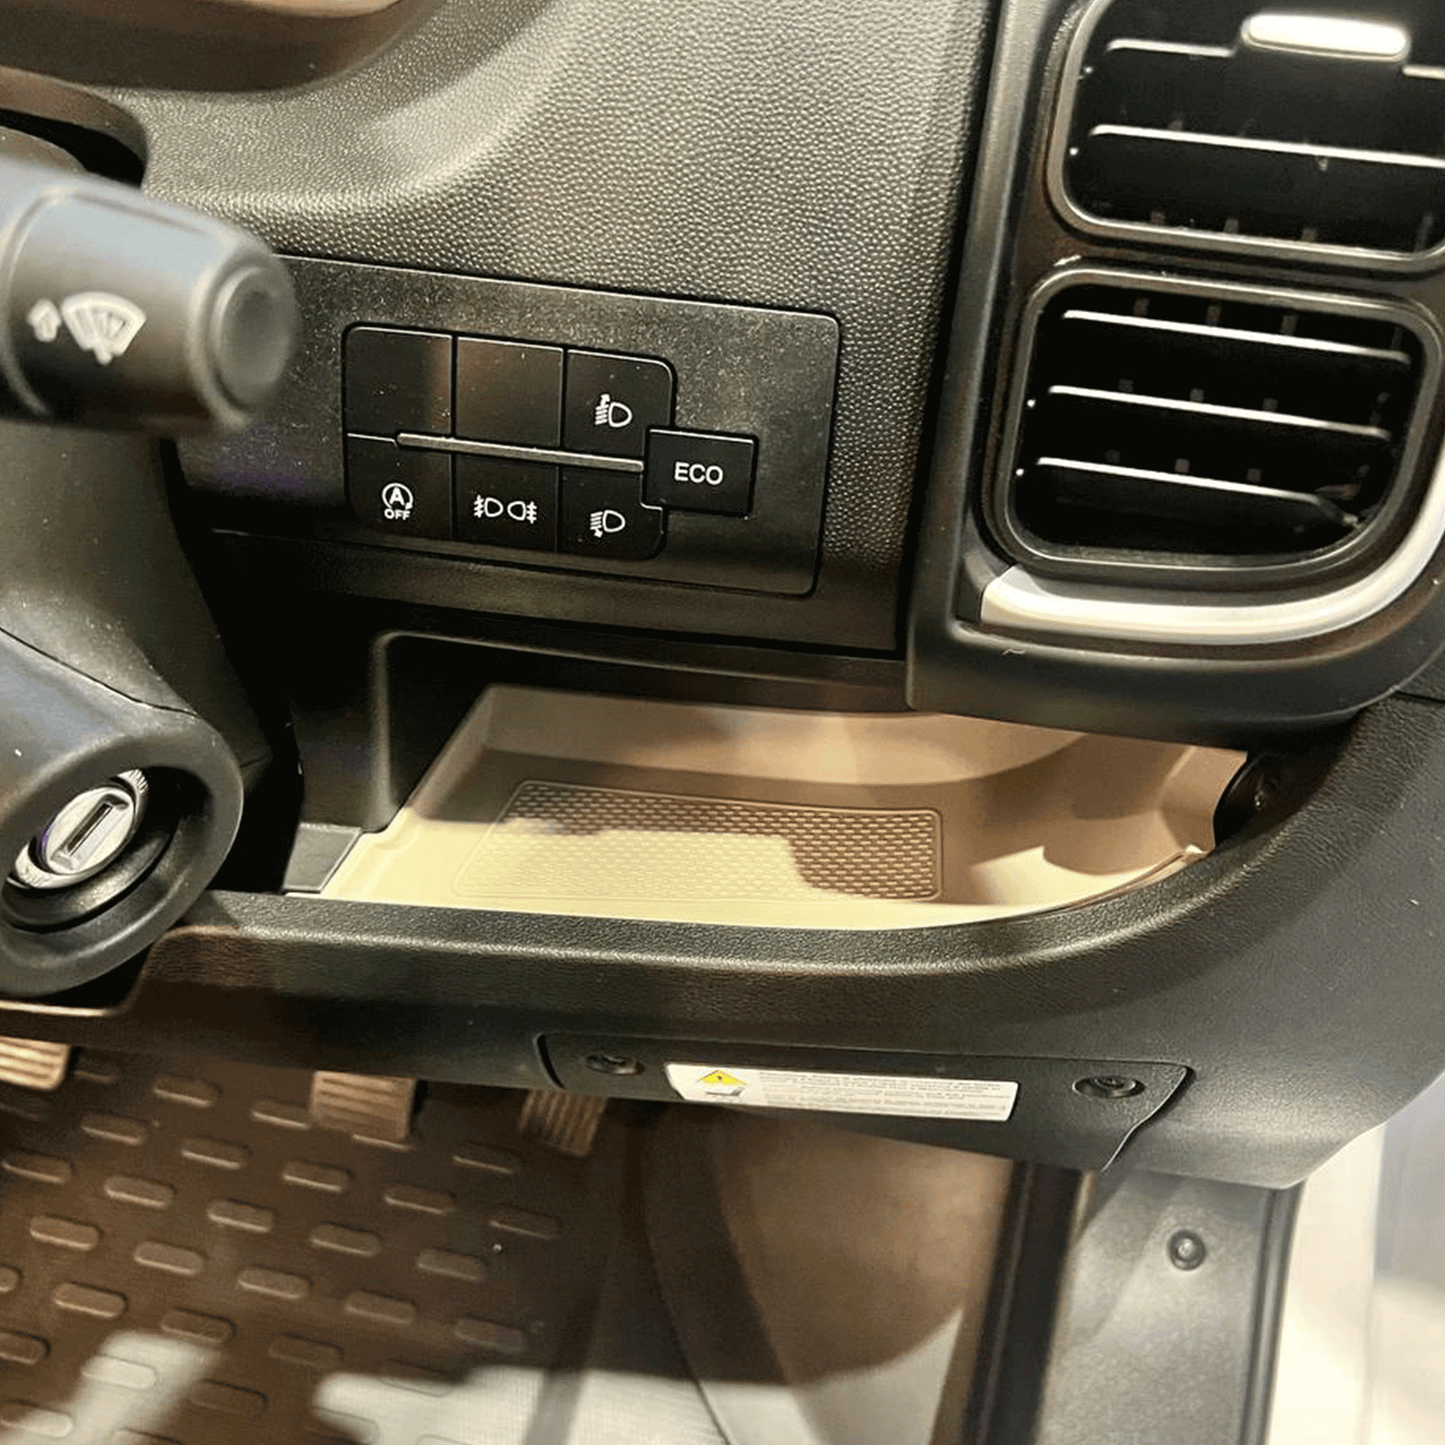 Citroen Relay motorhome Lower New Dashboard Rubber Inserts/Mats - Light Grey - RHD ideal motorhome owner gift